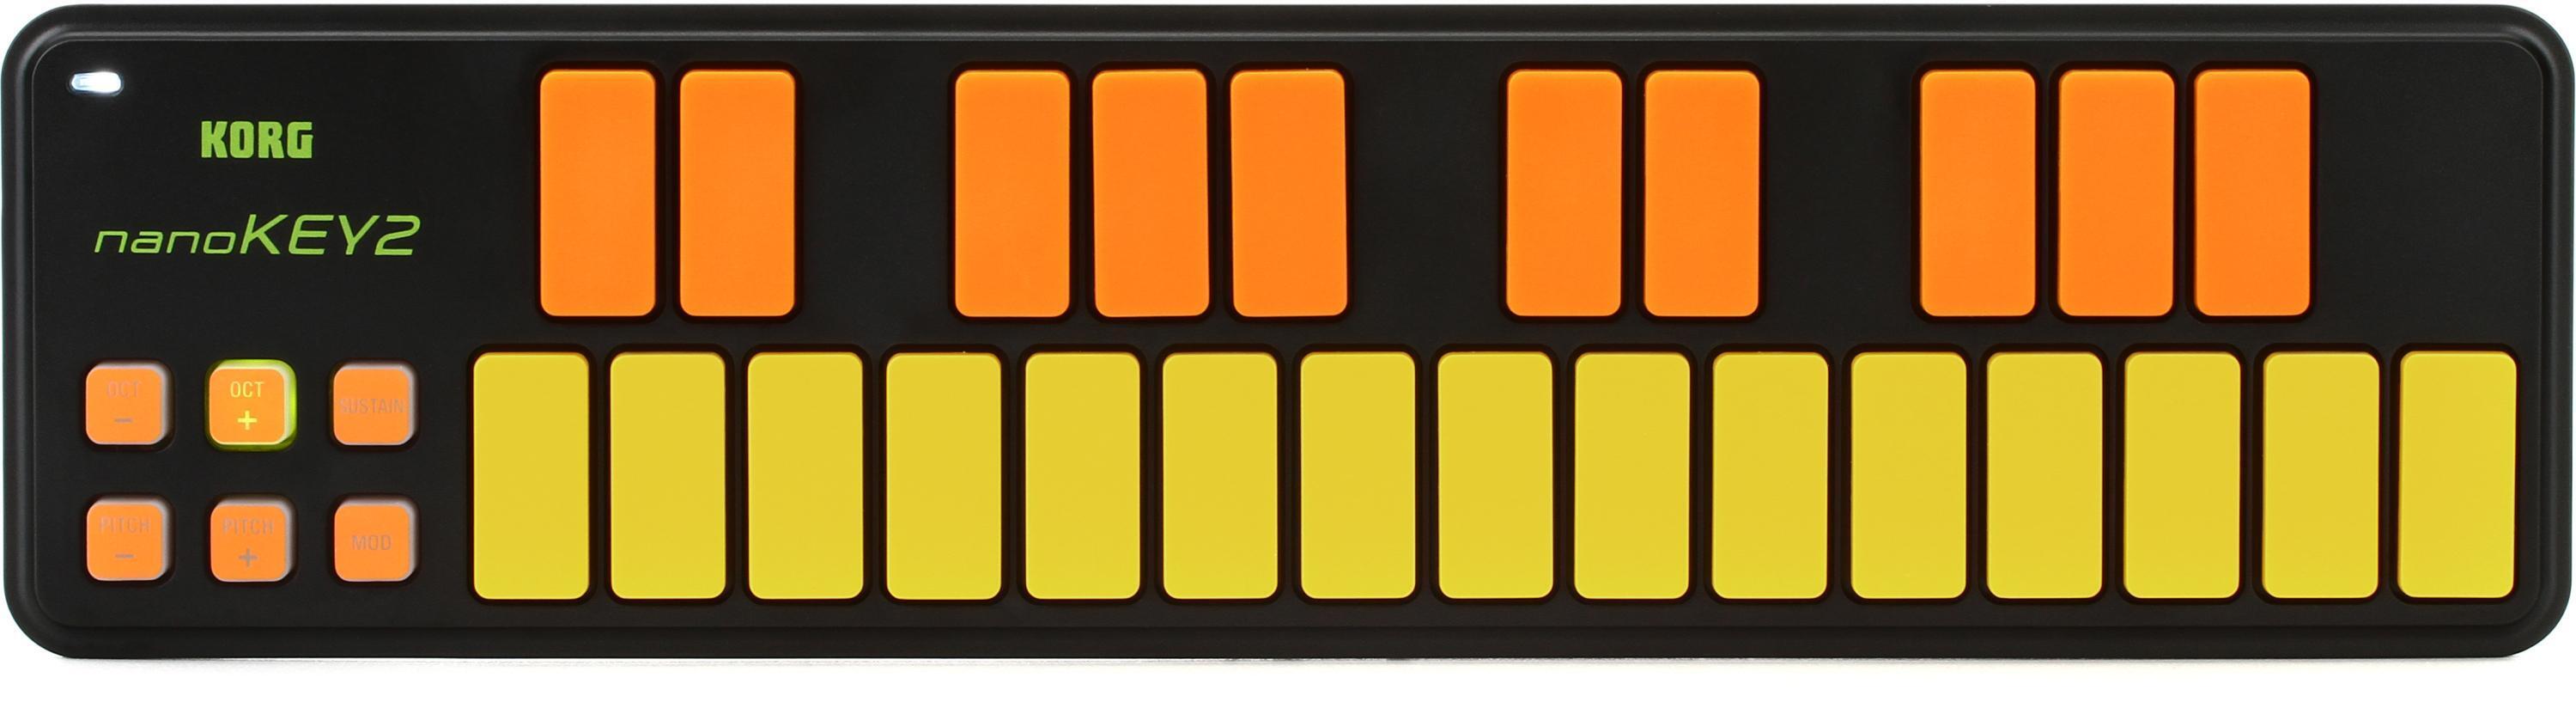 Korg nanoKEY2 25-key Keyboard Controller - Orange/Green Limited Edition